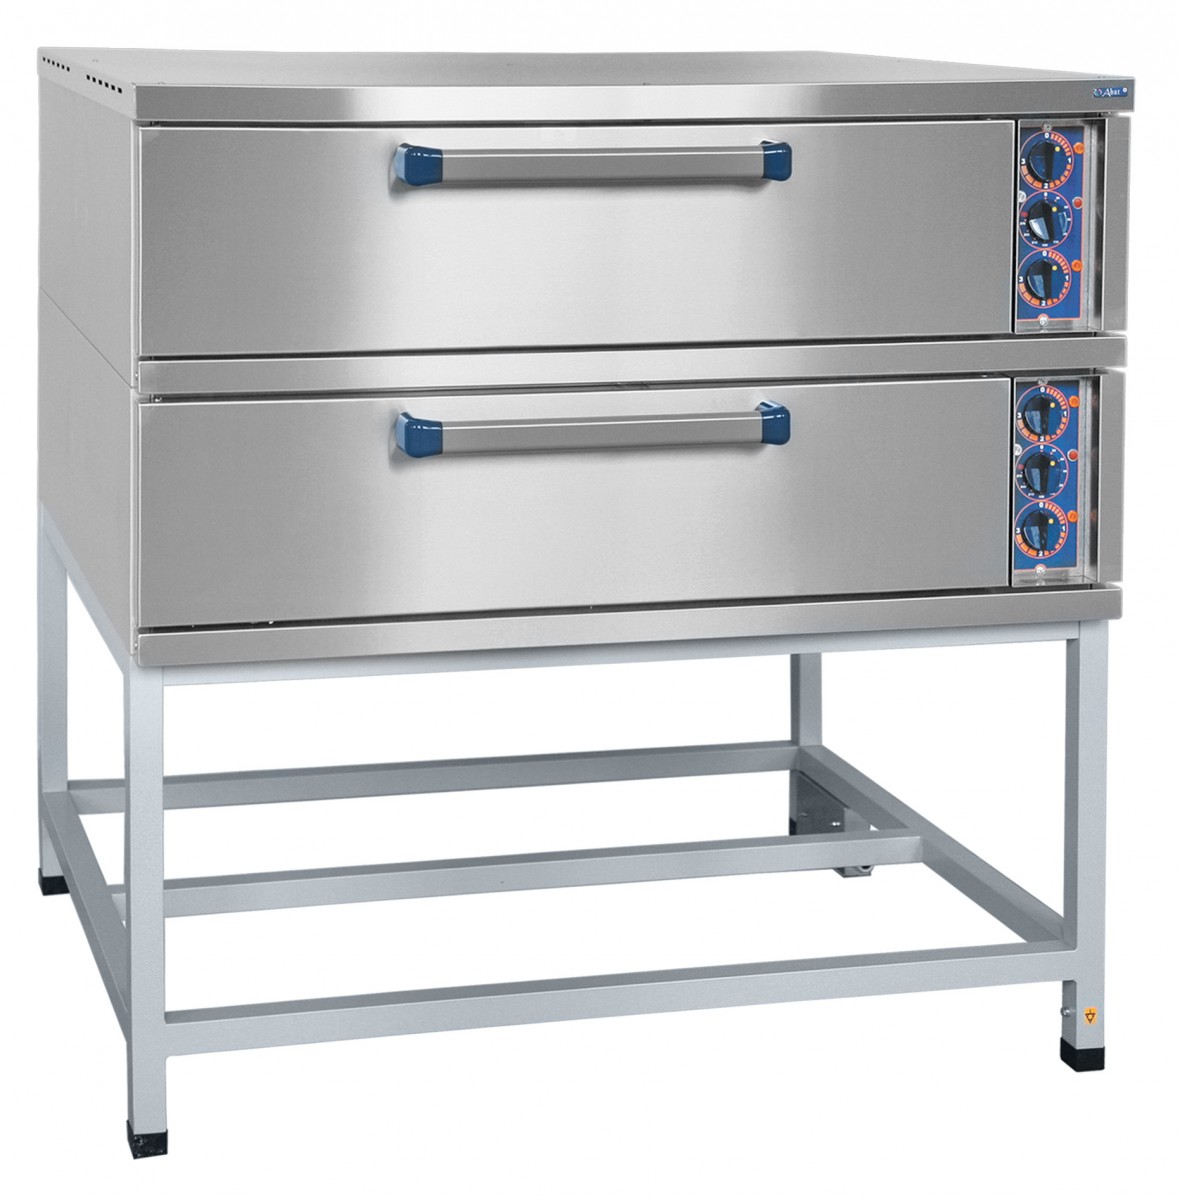 Electric cabinet baking Abat ESh-2K